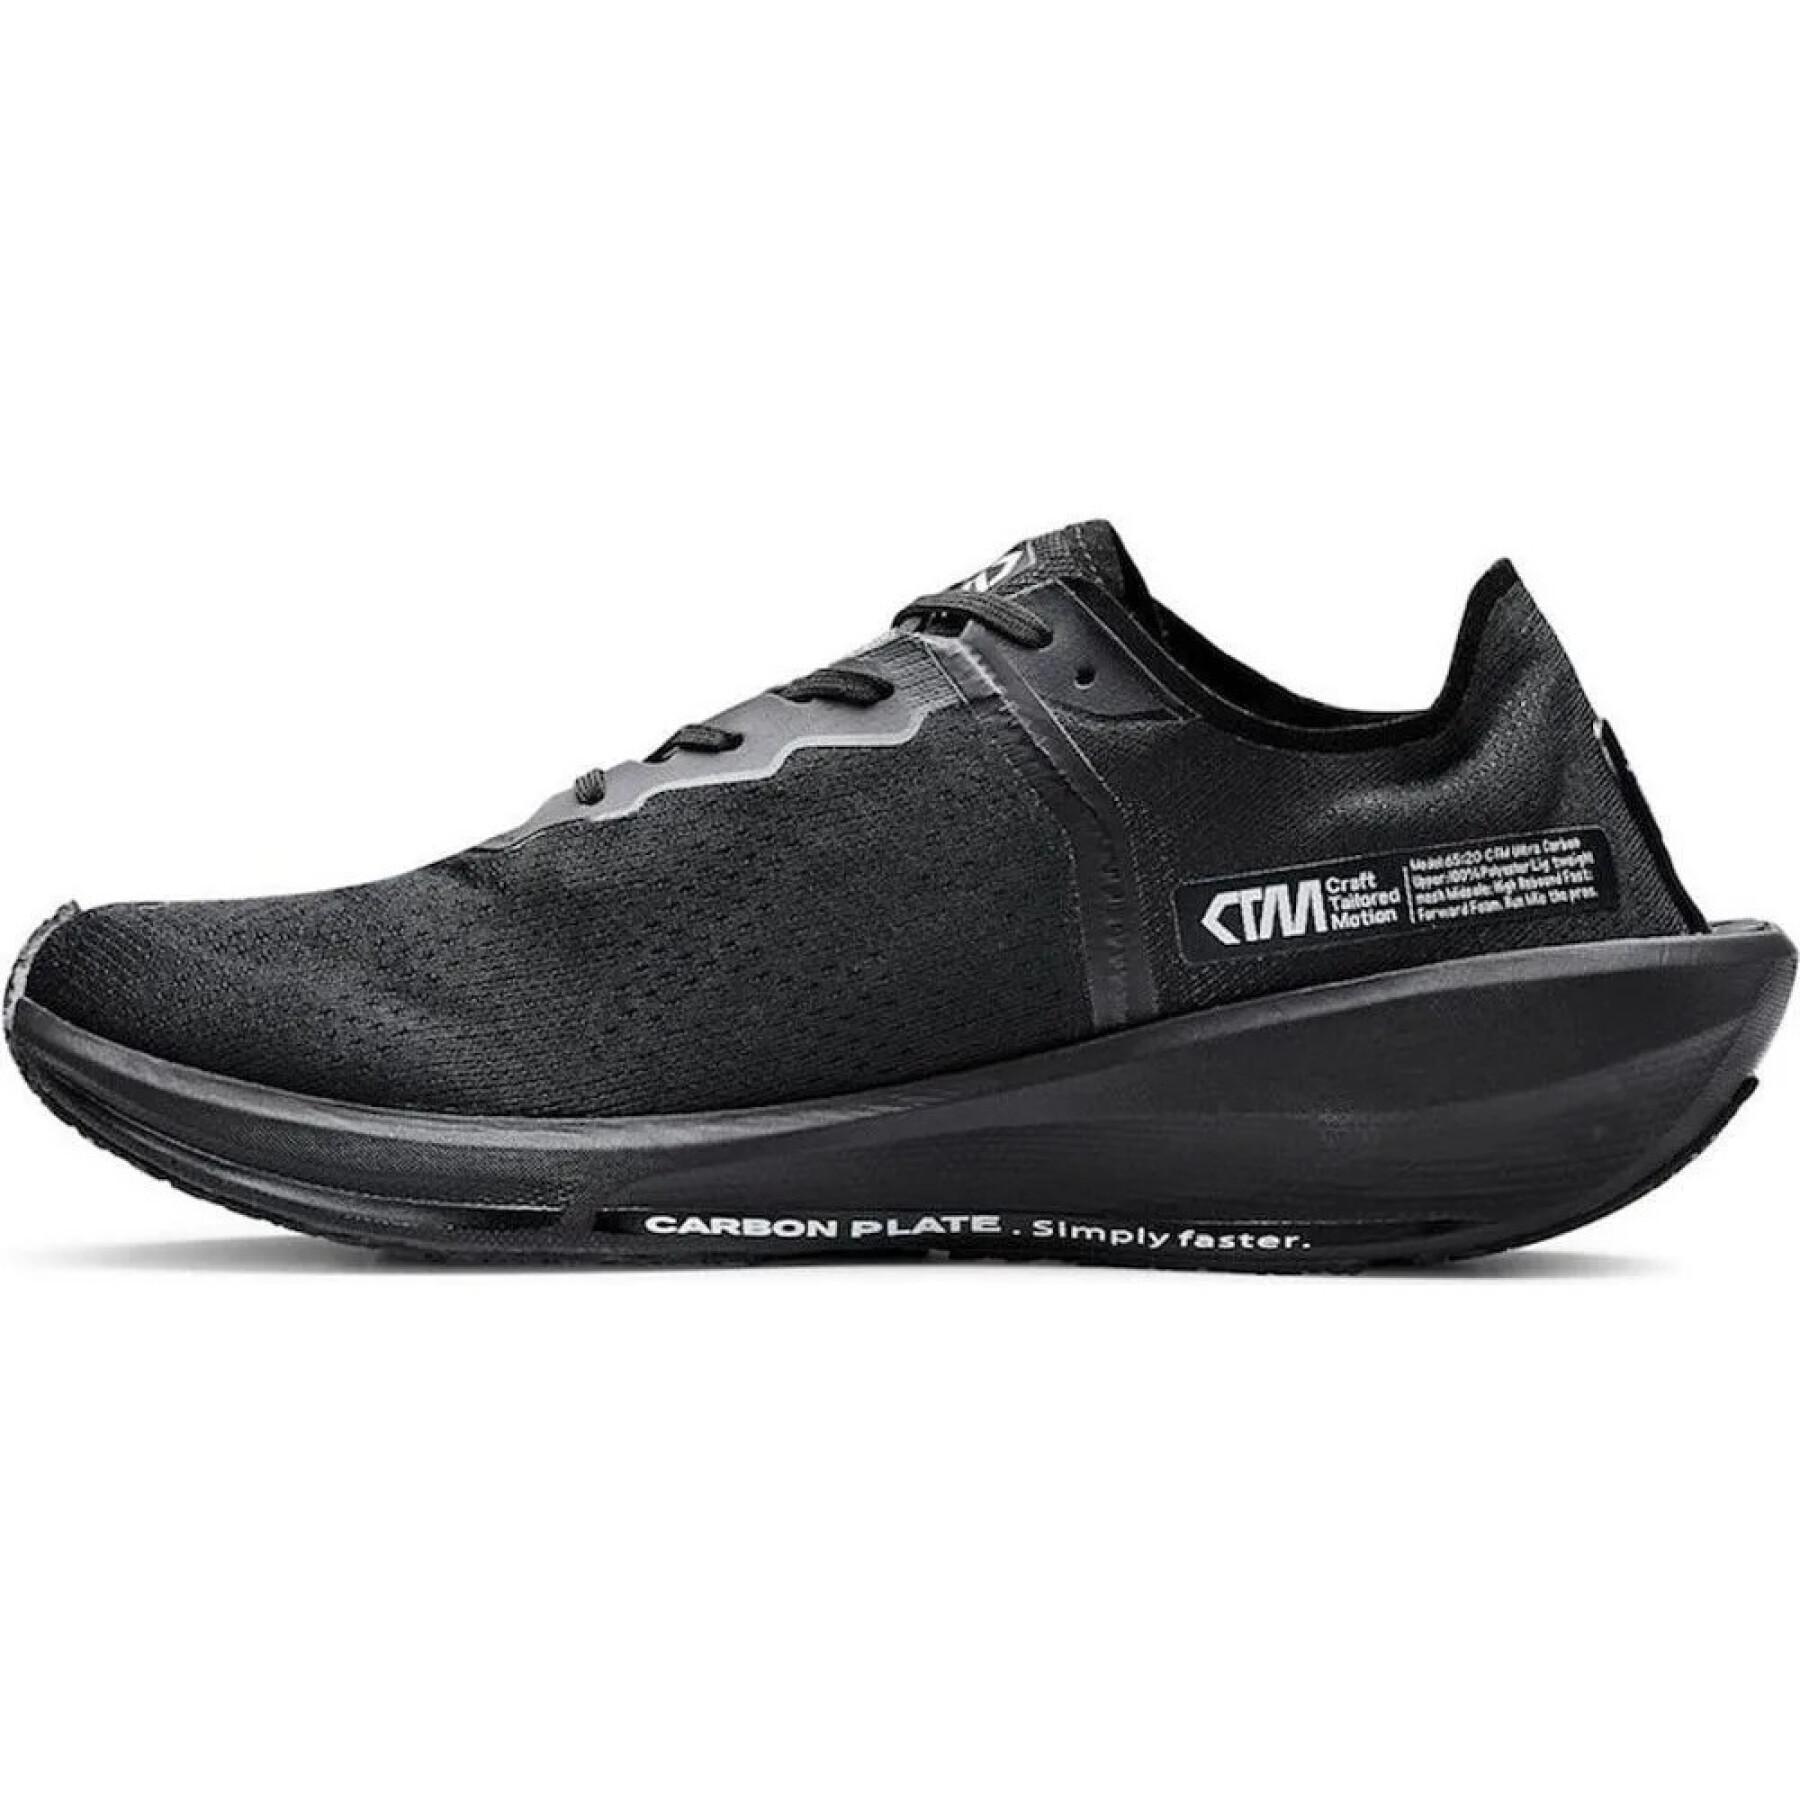 Schuhe Craft ctm carbon race rebel